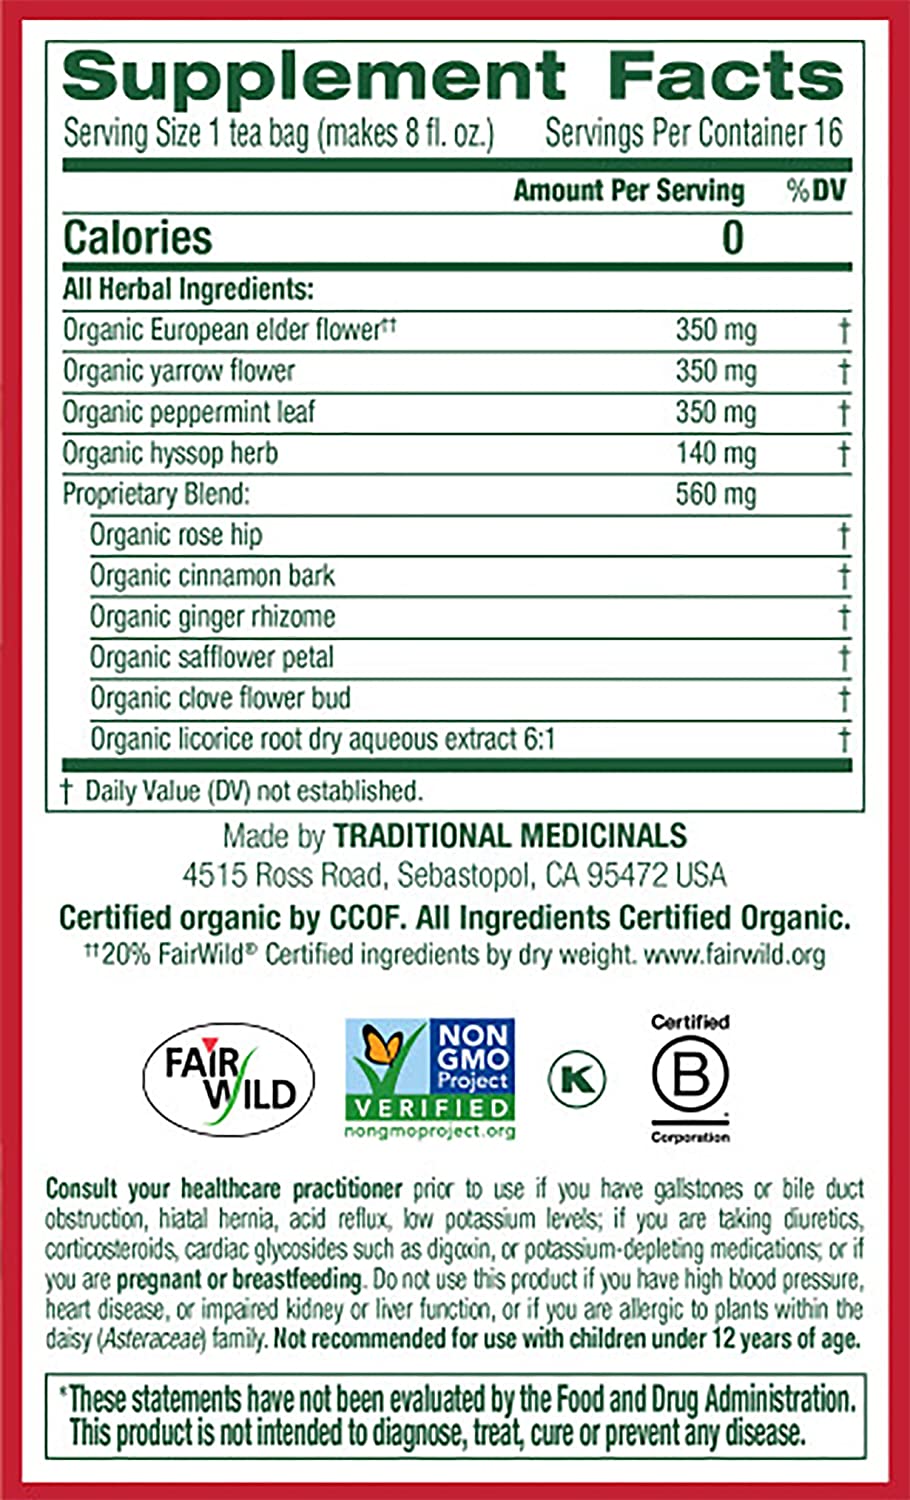 Traditional Medicinals, Organic Herbal Cold Care Elderflower Spice Herbal Tea, Warm & Comforting Seasonal Wellness, (Pack of 2) - 32 Tea Bags Total